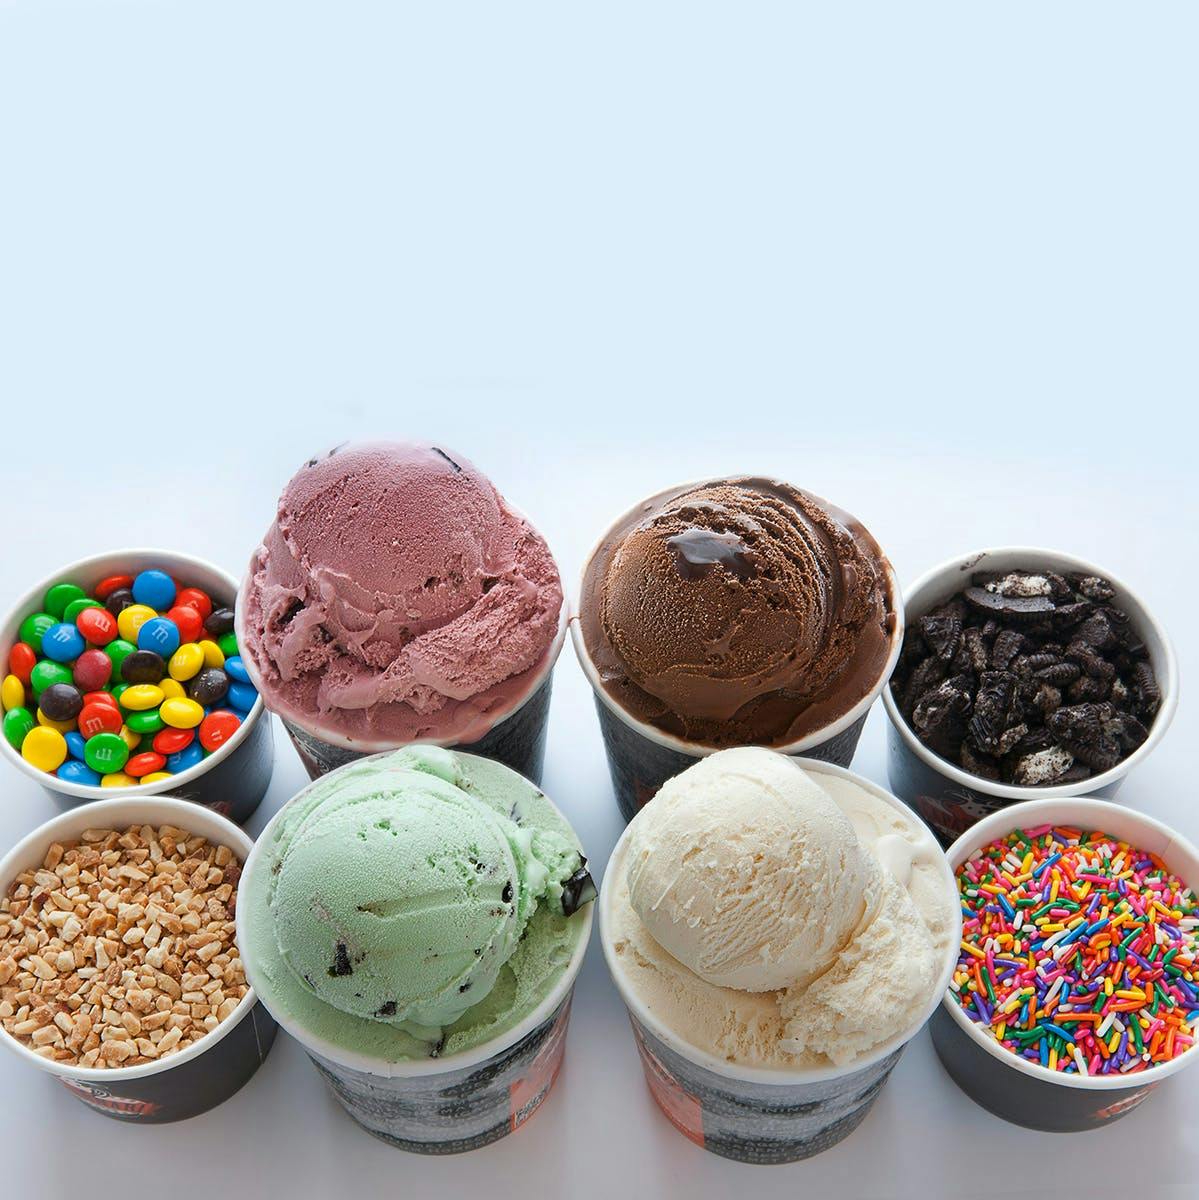 Ice Cream Party-In-A-Box by Capannari Ice Cream | Goldbelly